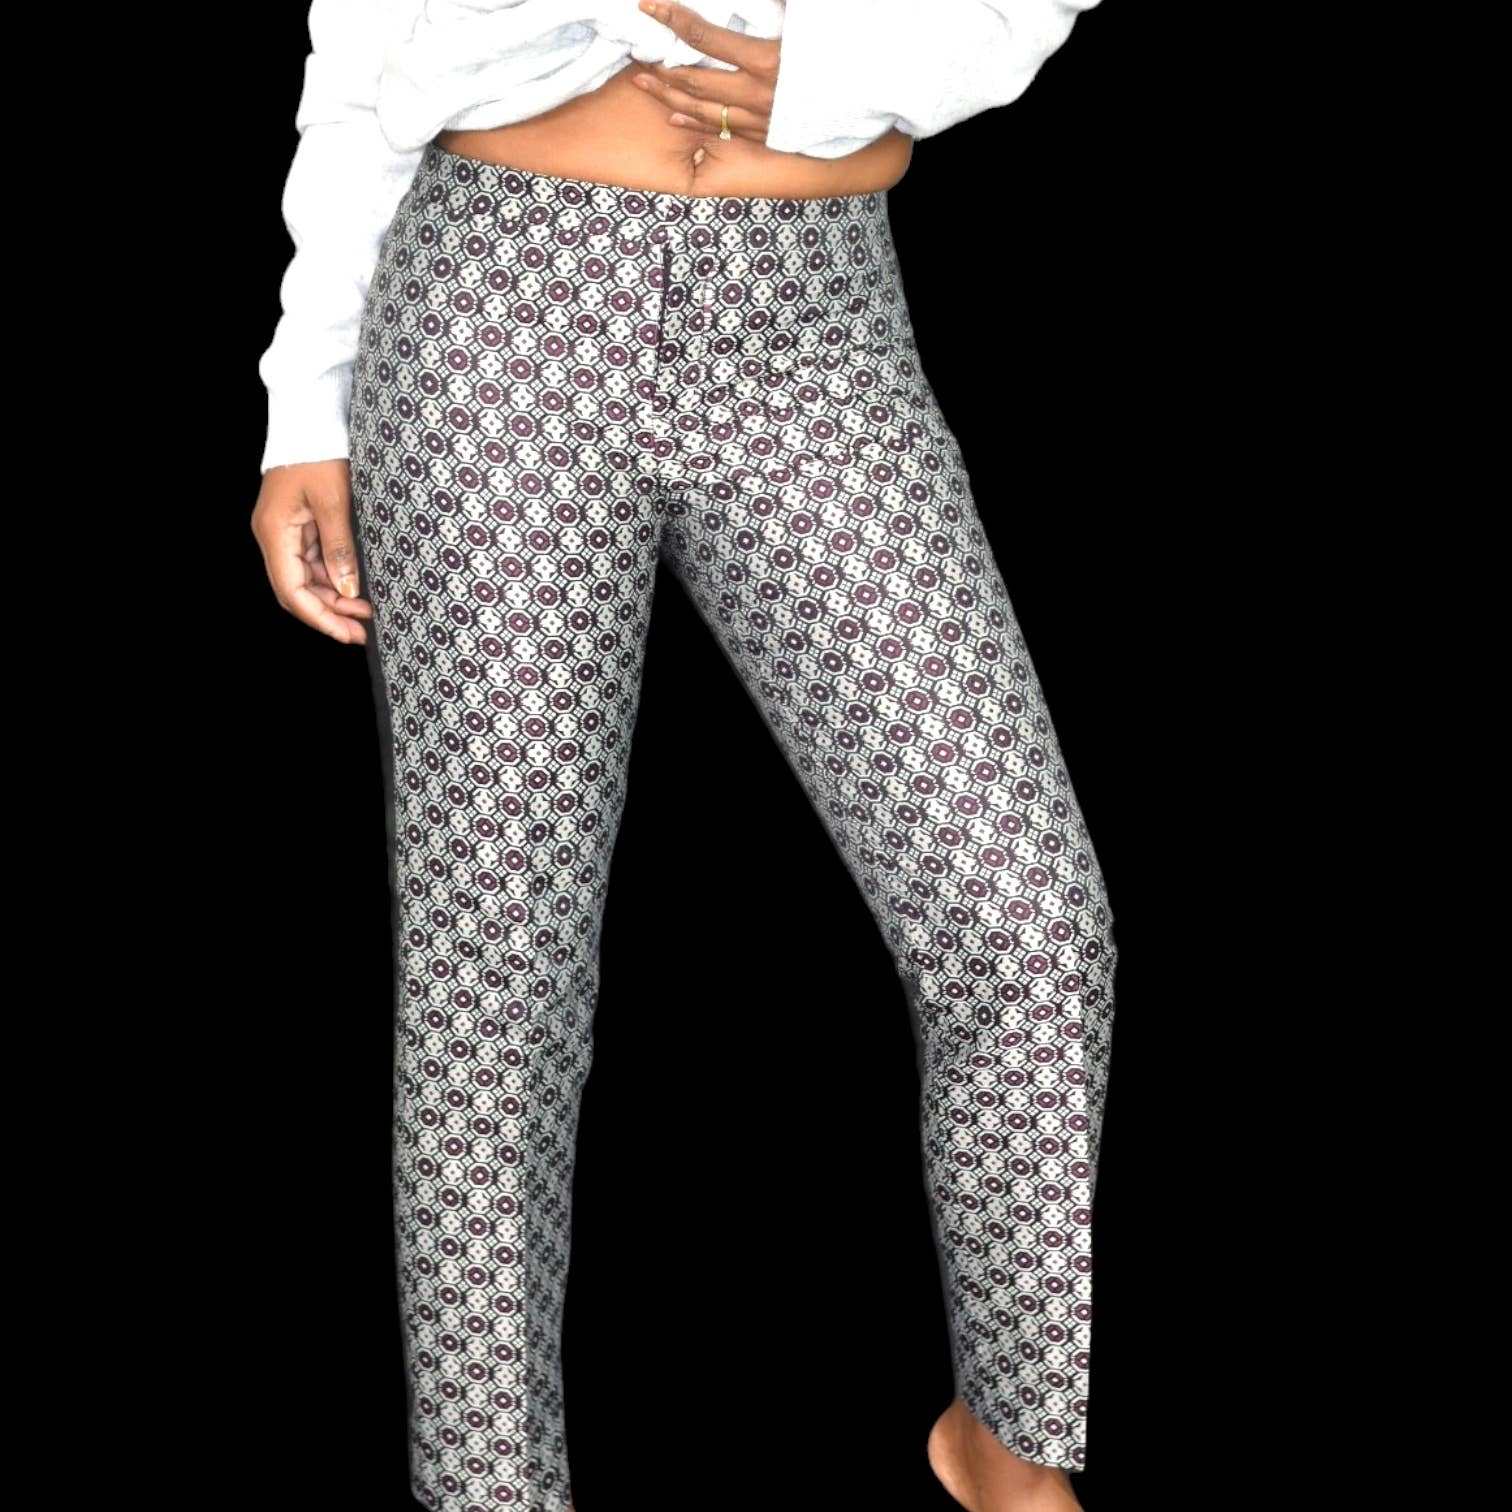 Club Monaco Aida Brocade Trousers Grey Jacquard Ankle Pants Slim Patterned Dressy Size 2